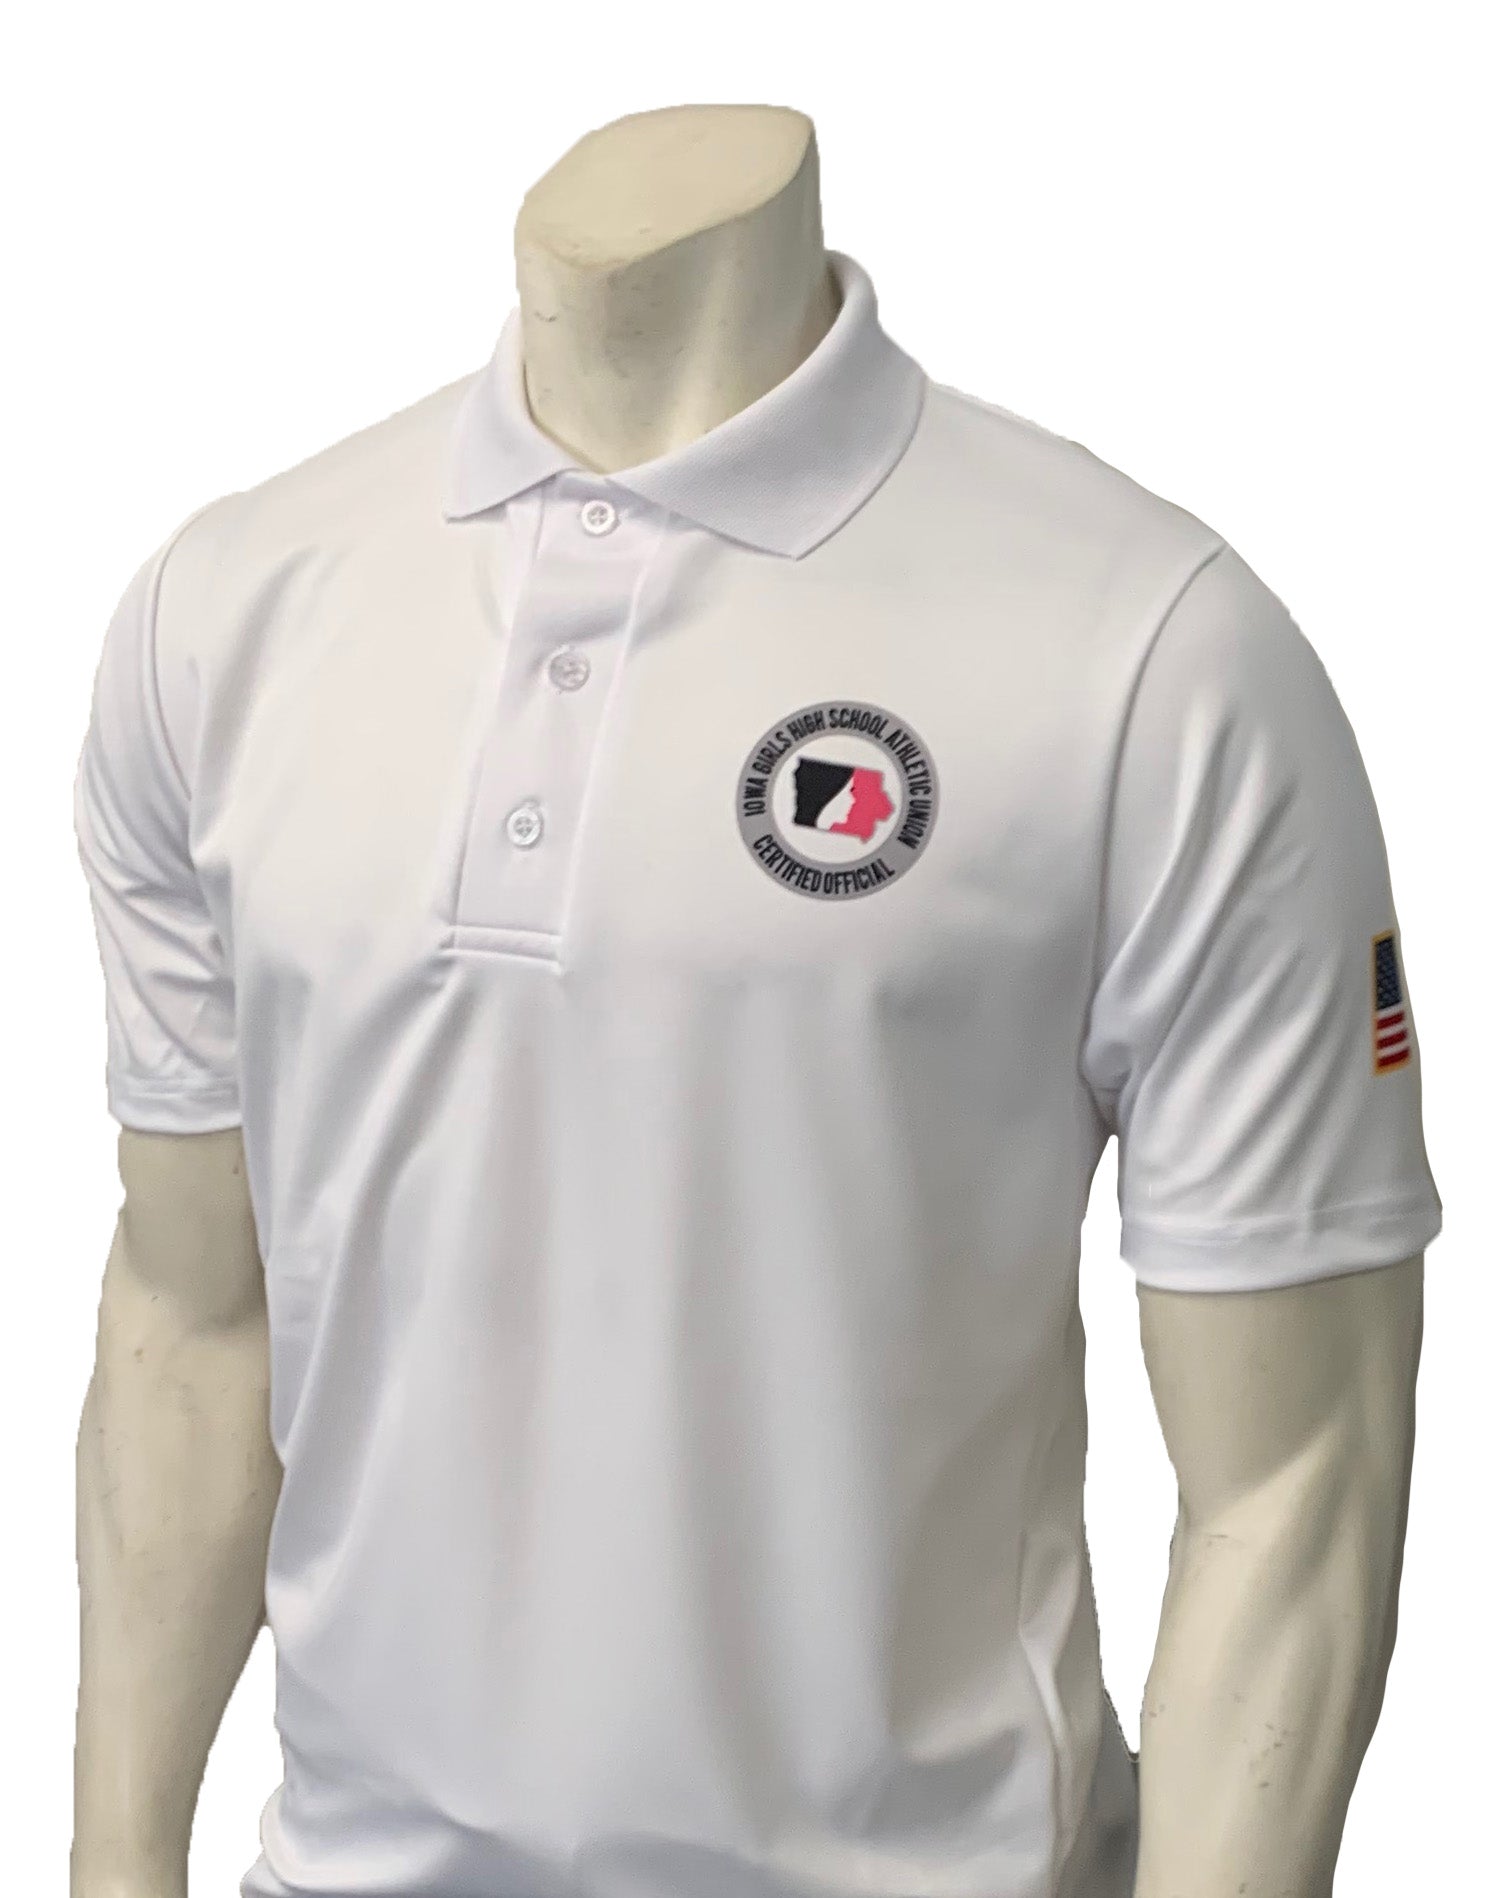 USA400IGU - Smitty "Made in USA" - IGHSAU Men's Short Sleeve Volleyball Shirt